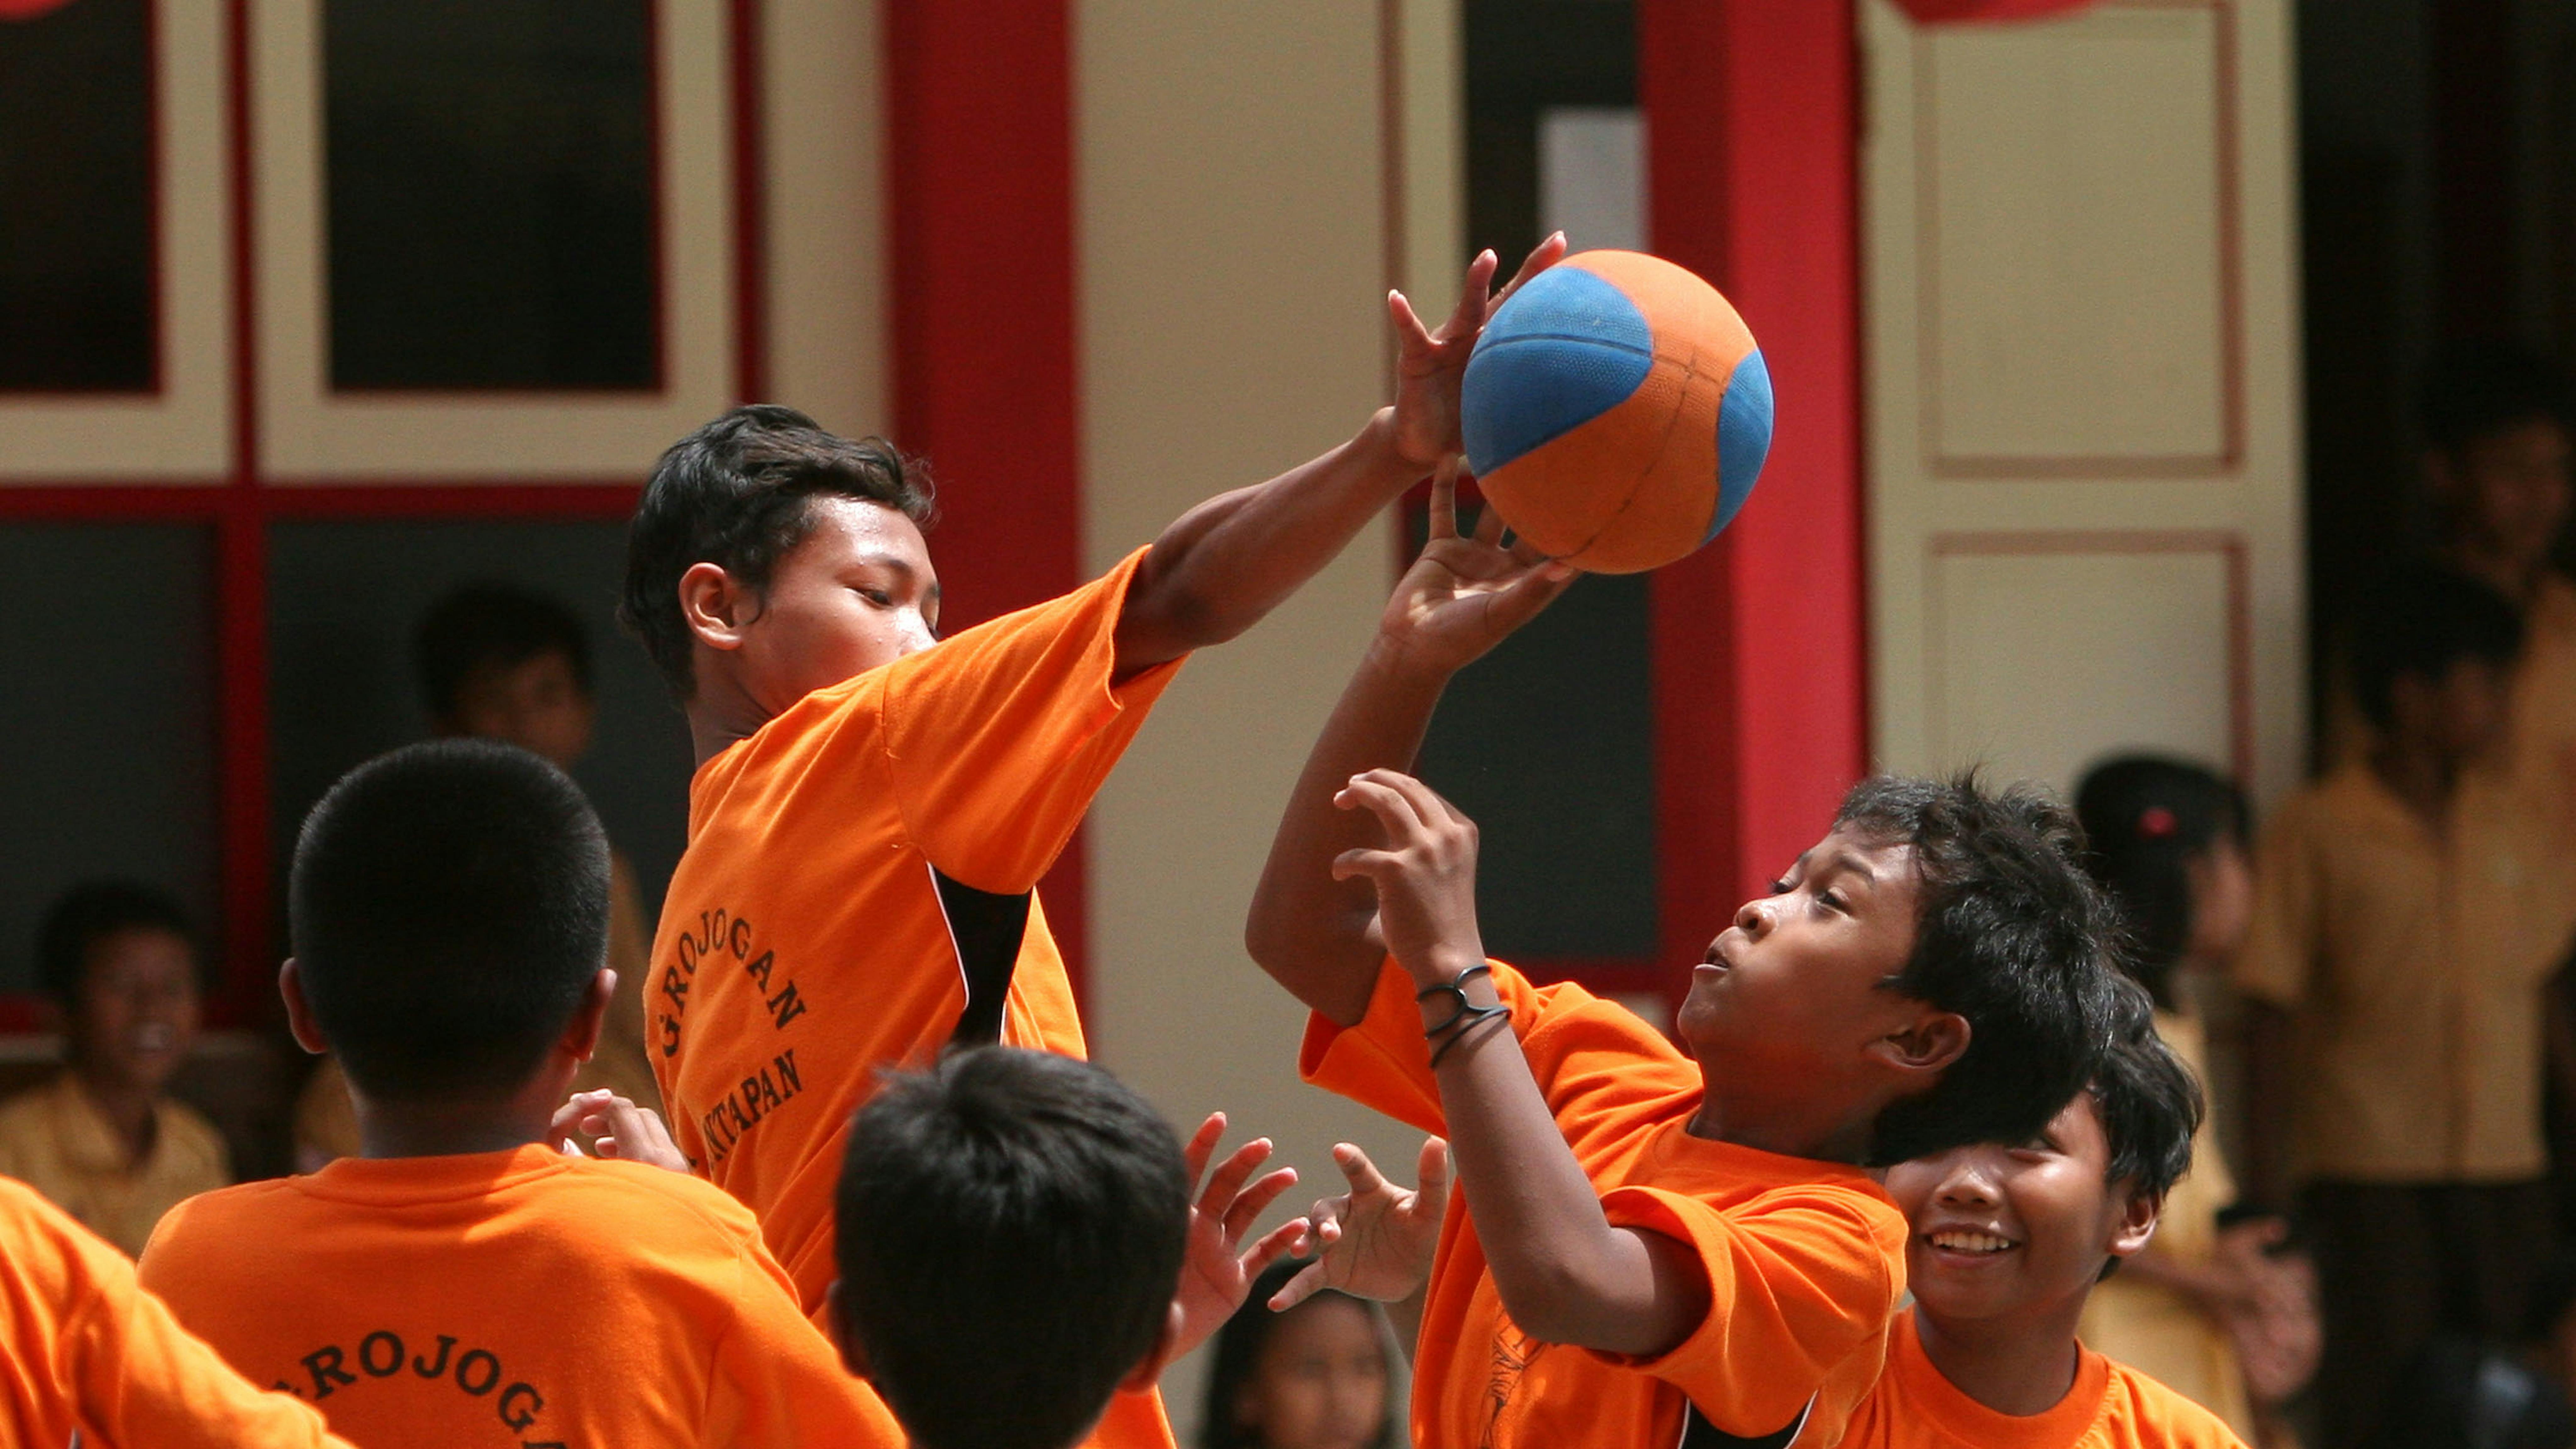 Indonesia, bambini giocano a pallacanestro a scuola